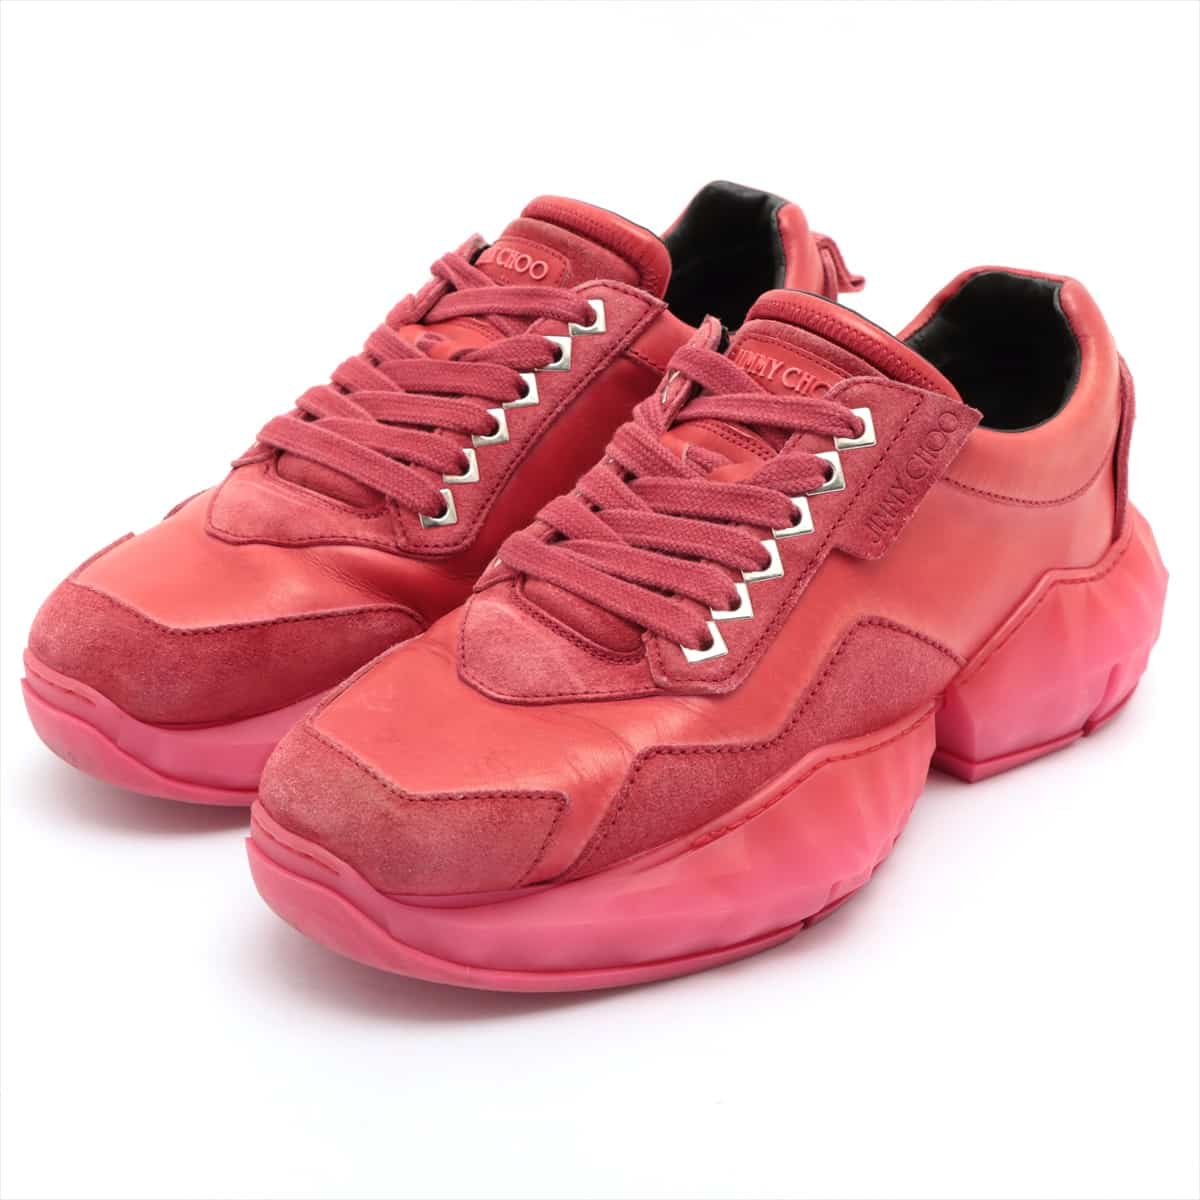 Jimmy Choo Leather & Suede Sneakers 40 Men's Pink Diamond